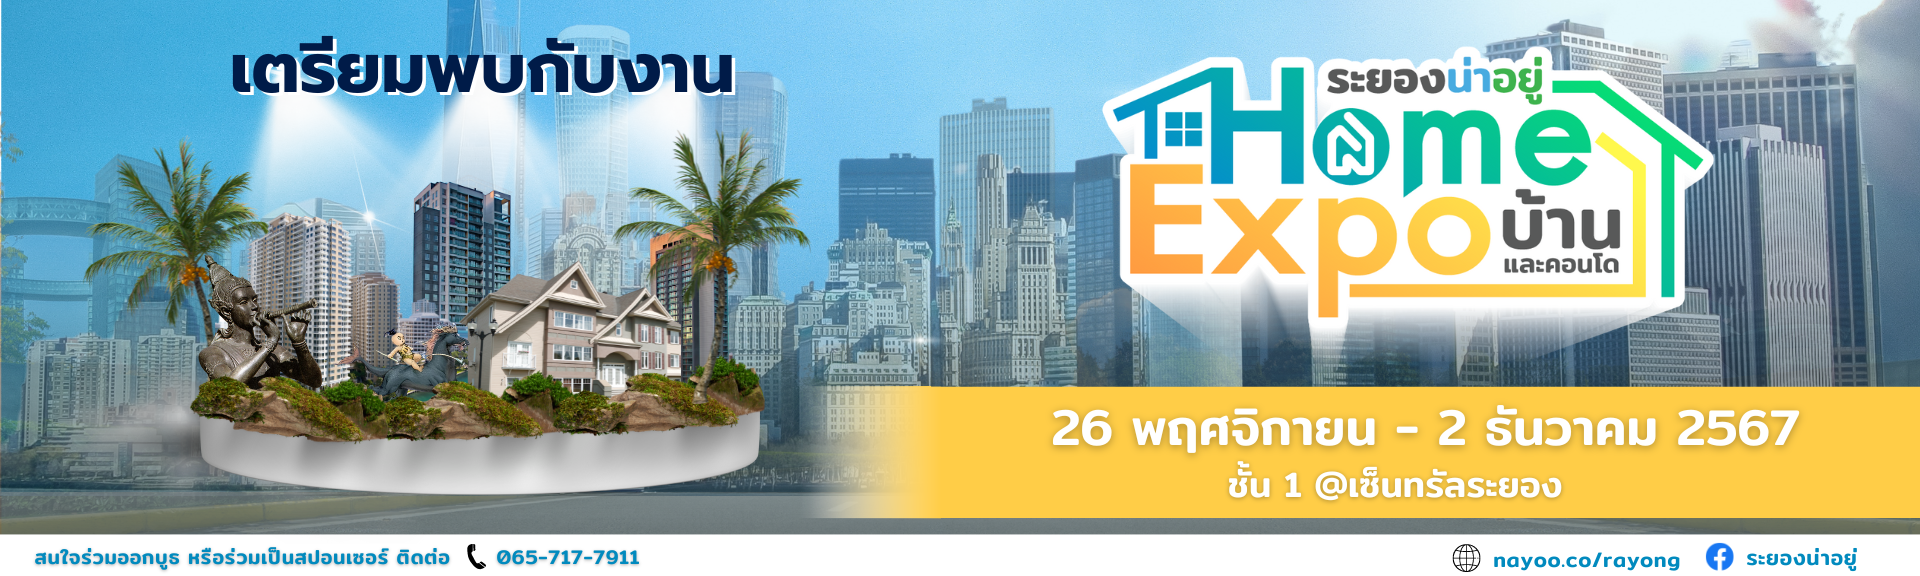 Home Expo บ้านและคอนโด 2025